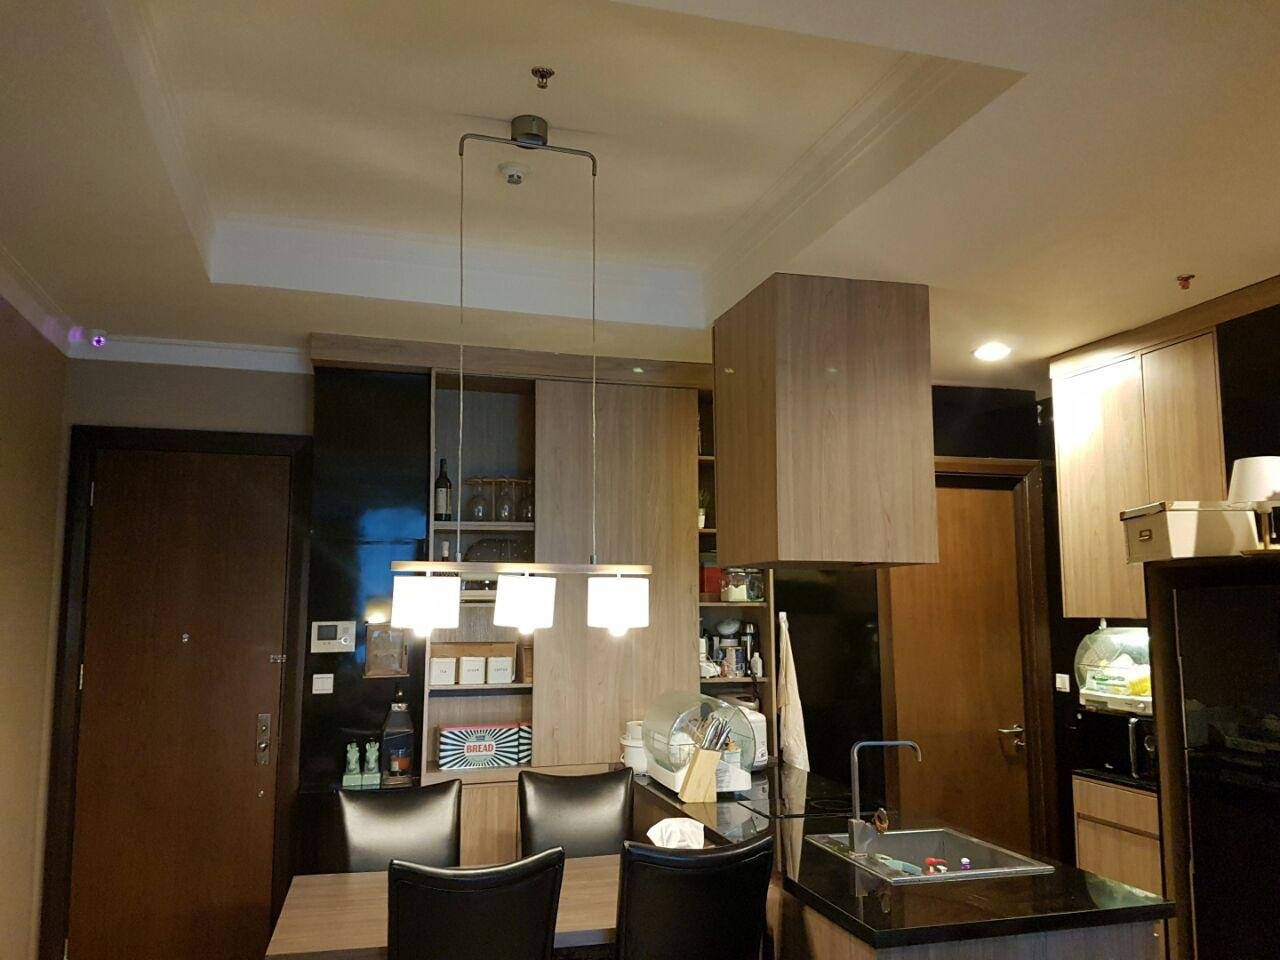 Sale! Apartemen Residences 8 Senopati Jakarta Selatan – 2+1 BR Fully Furnished, High Floor, Good Furniture